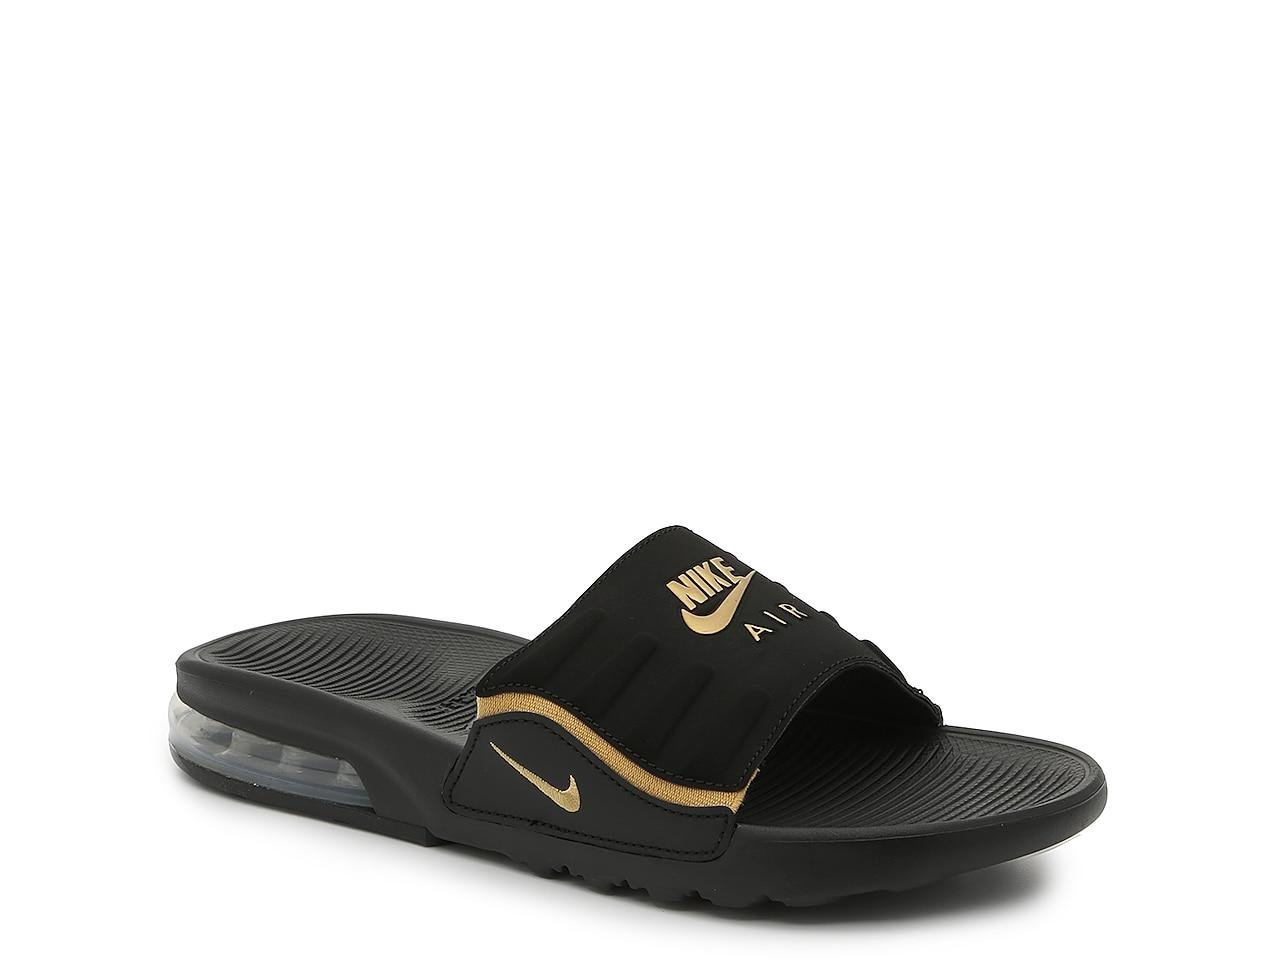 Nike Synthetic Air Max Camden Slide Sandal in Black/Gold Metallic (Black) |  Lyst